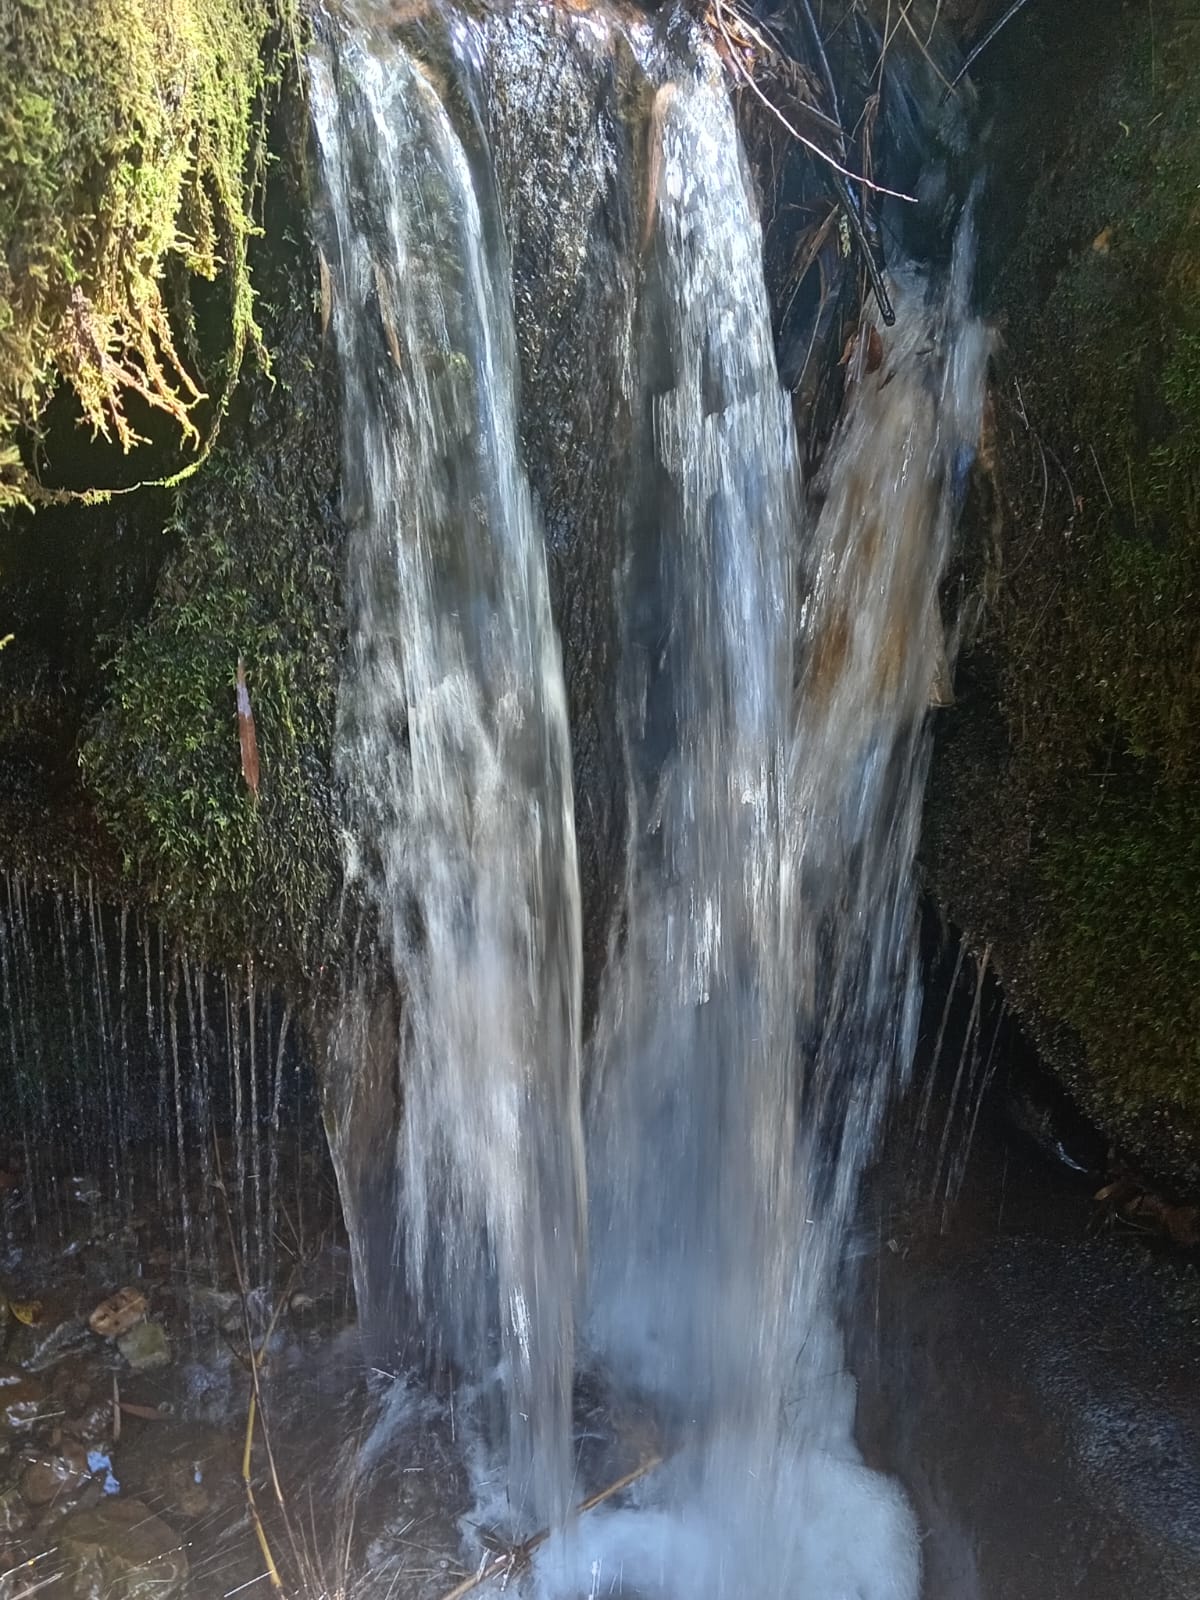 imagen de una cascada con agua corriendo.